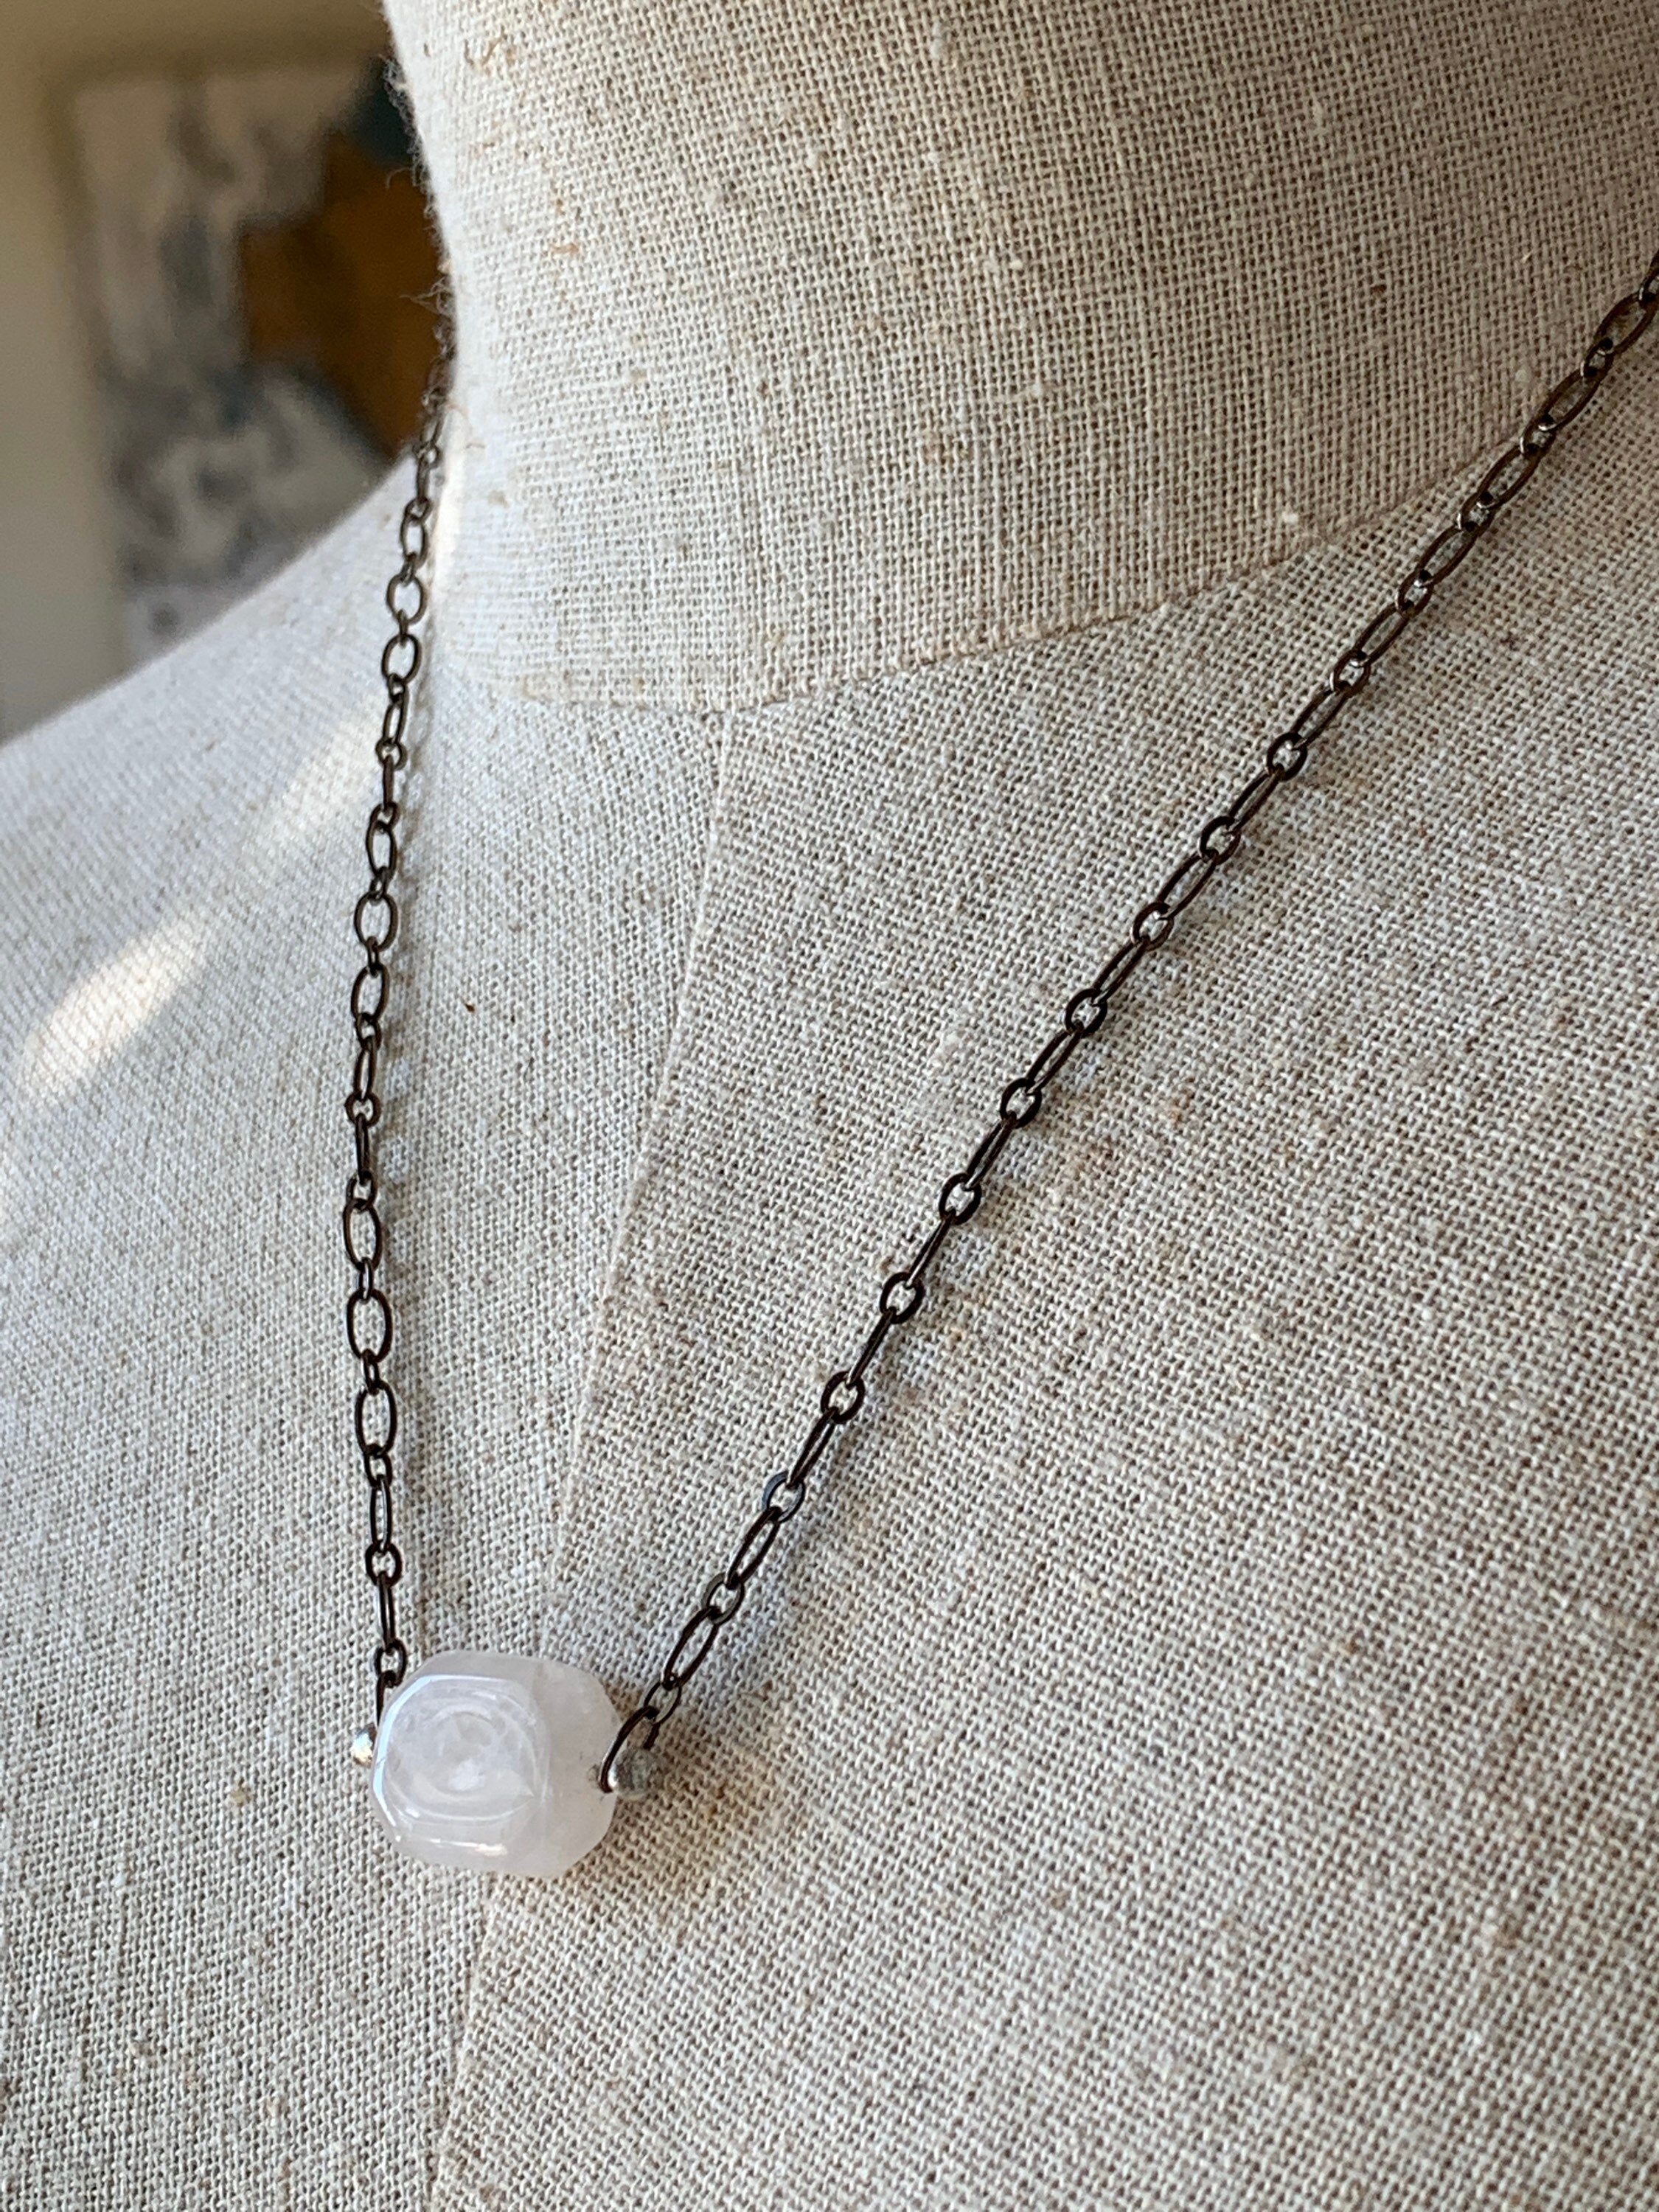 real rose quartz necklace